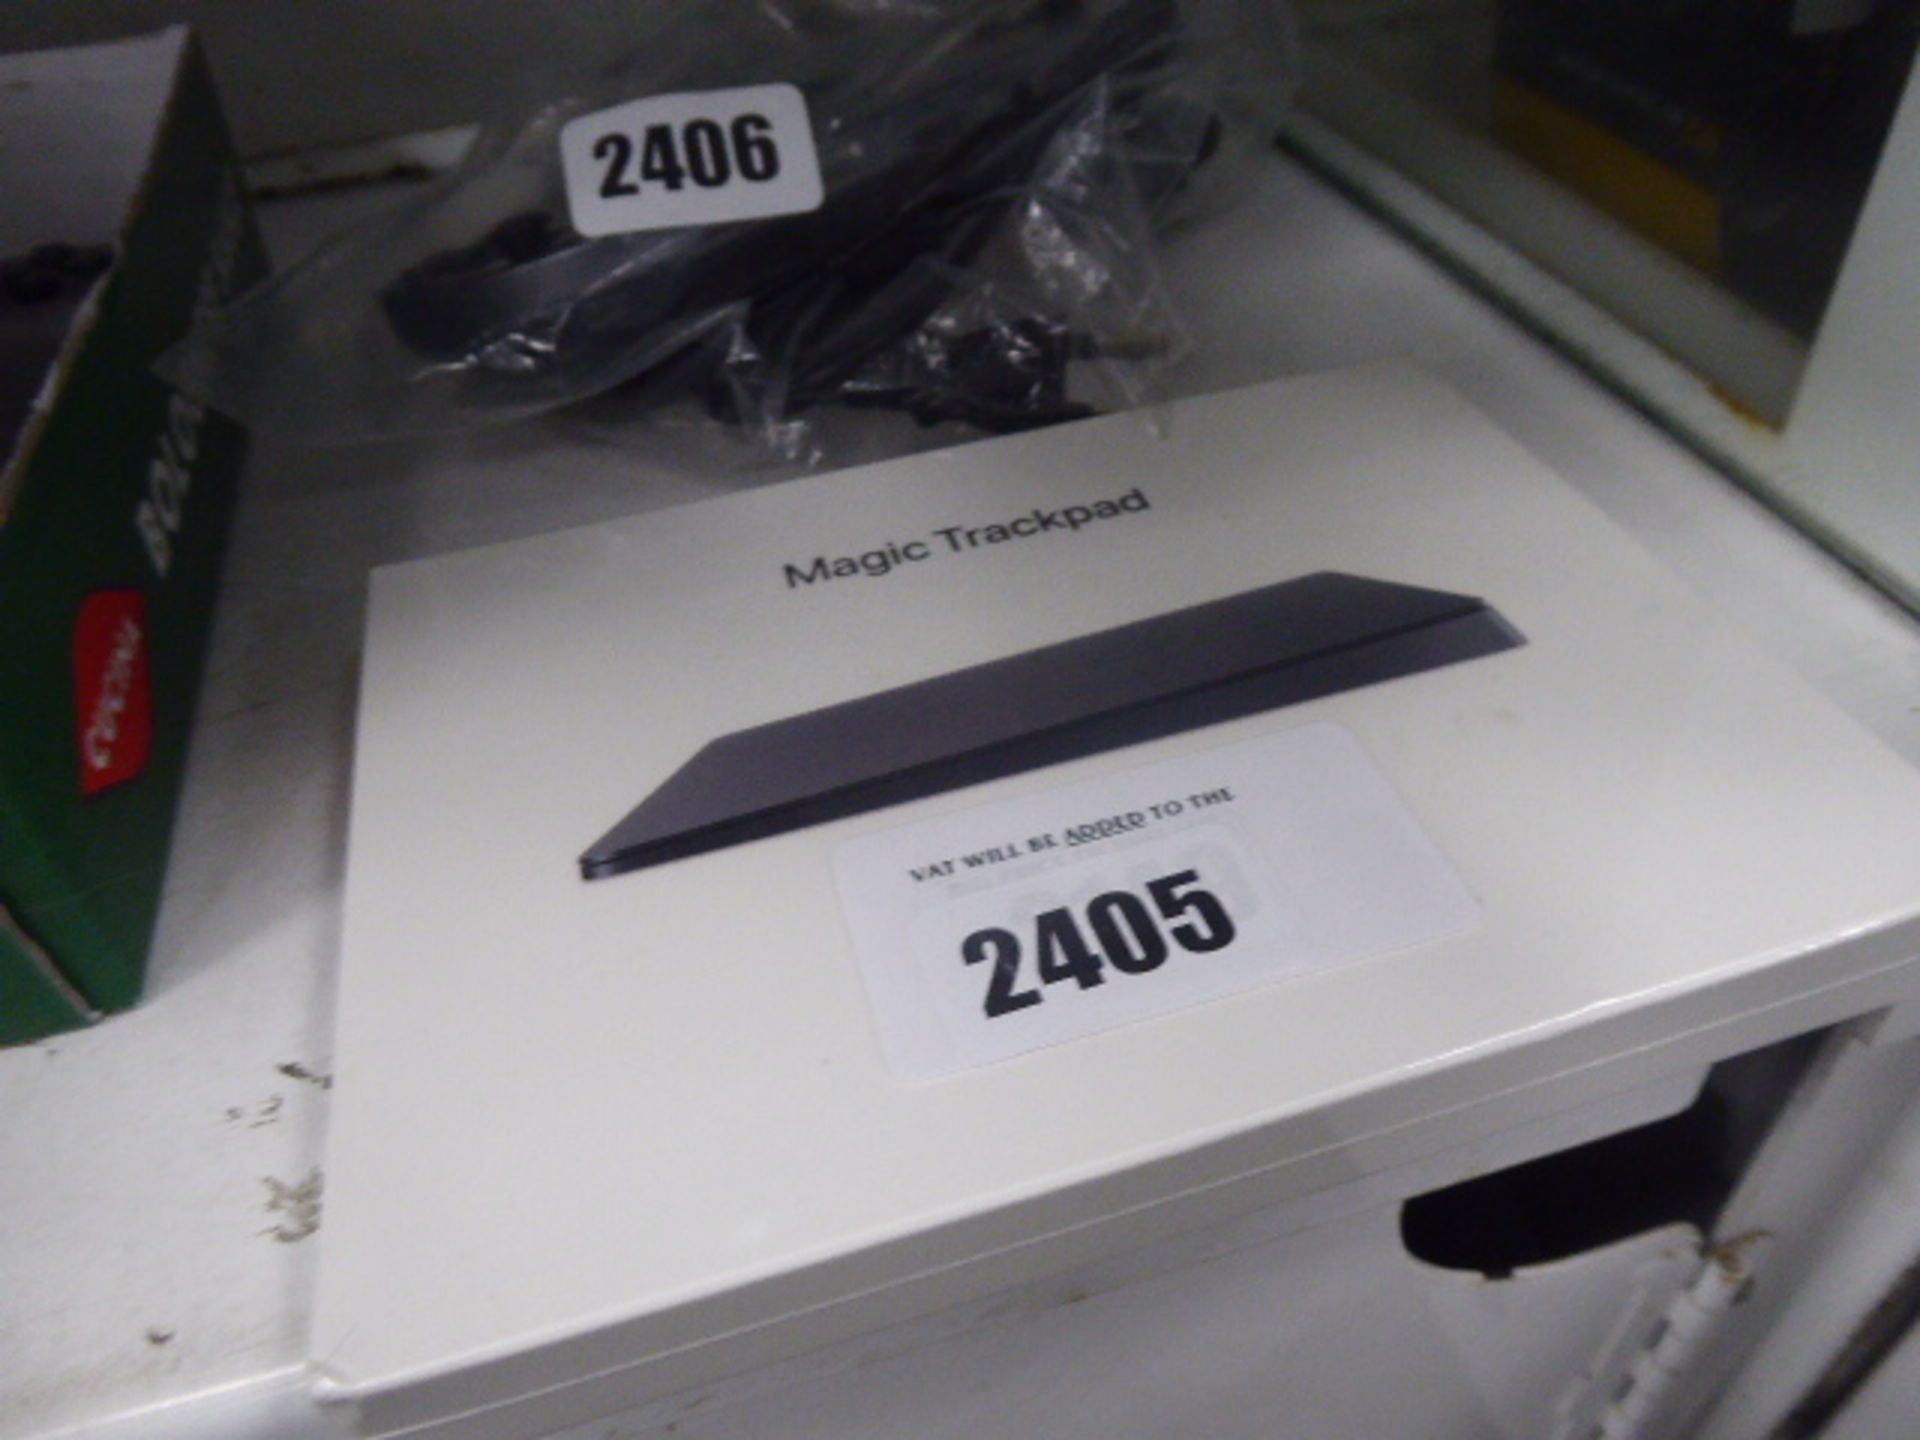 2149 - Apple Magic trackpad in box (model A1535)